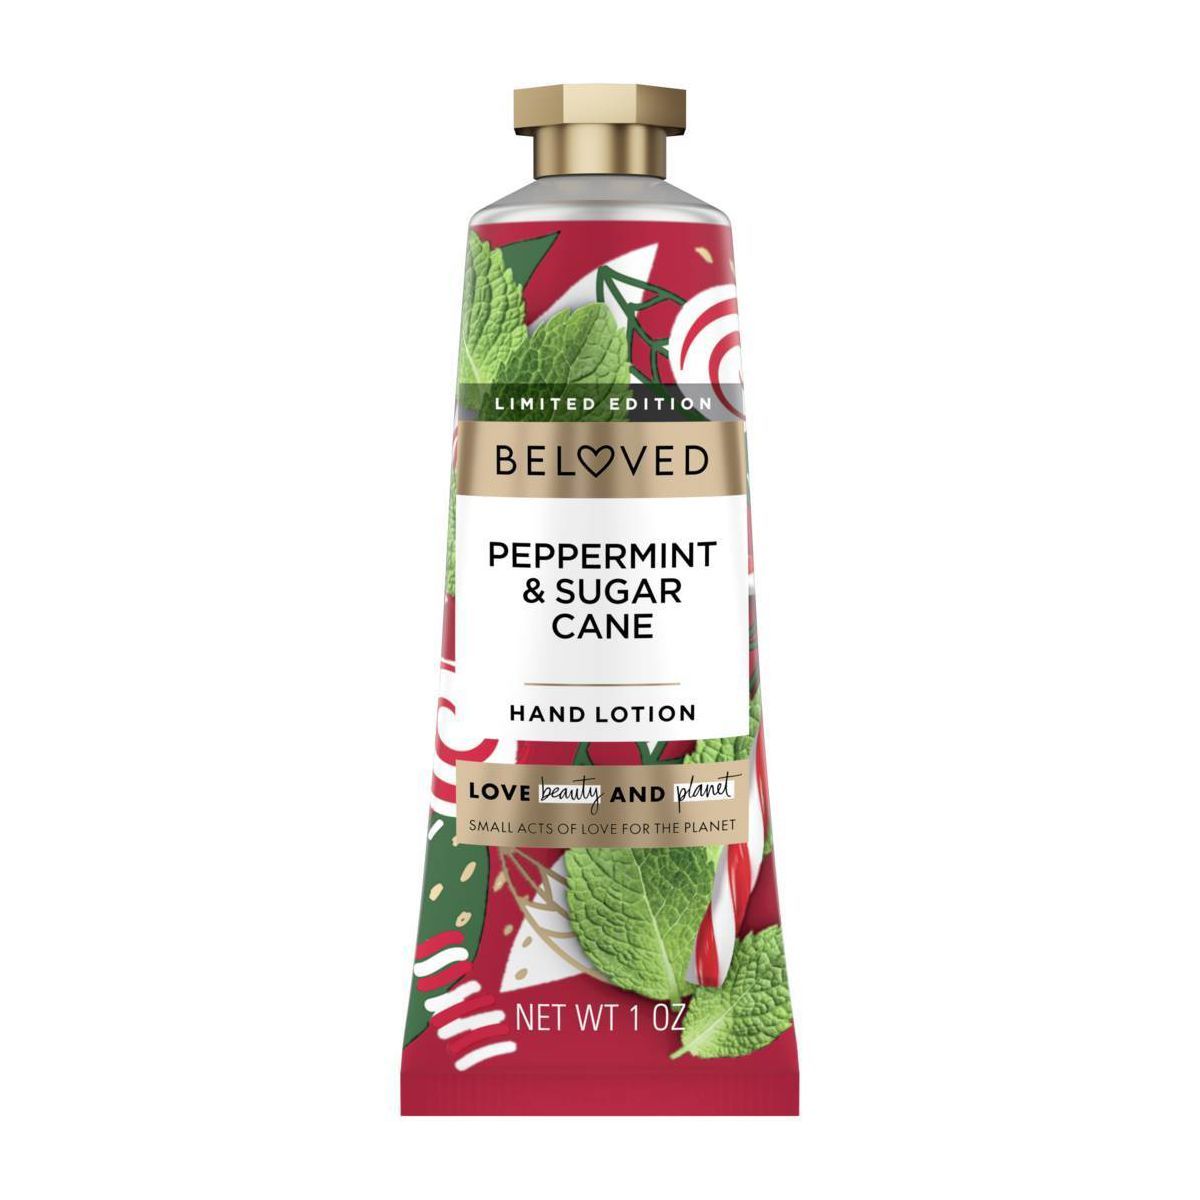 Beloved Peppermint & Sugar Cane Hand Lotion - 1oz | Target